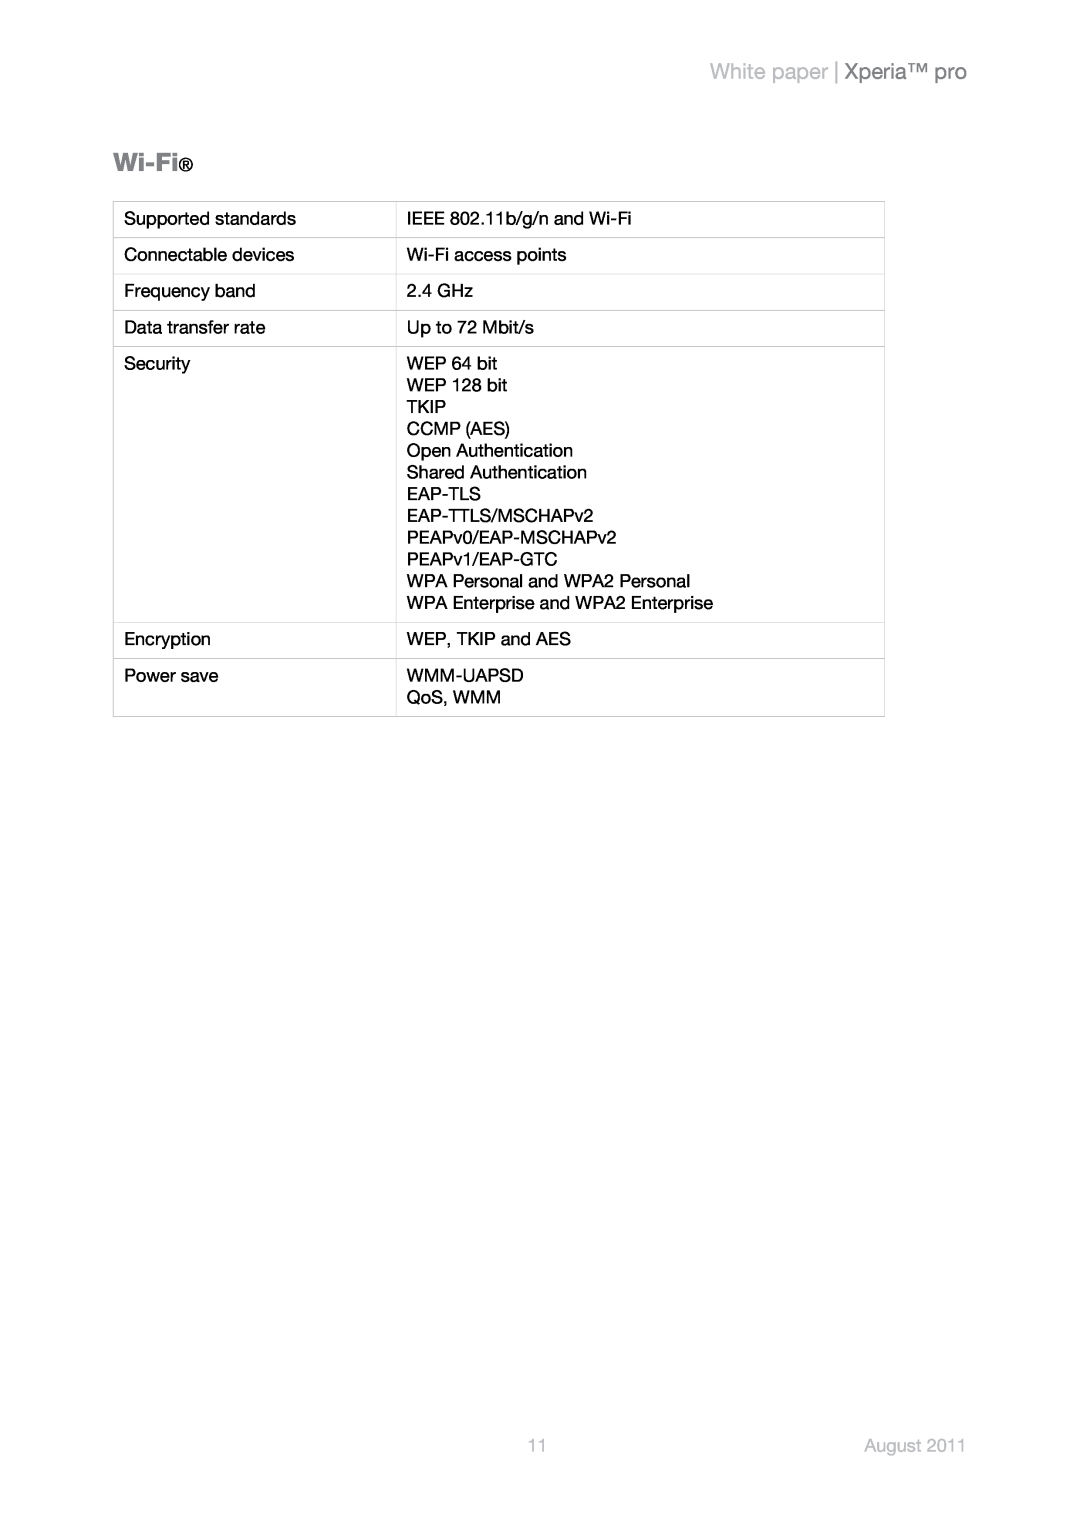 Sony Ericsson MK16i, MK16a manual Wi-Fi, White paper Xperia pro, August 